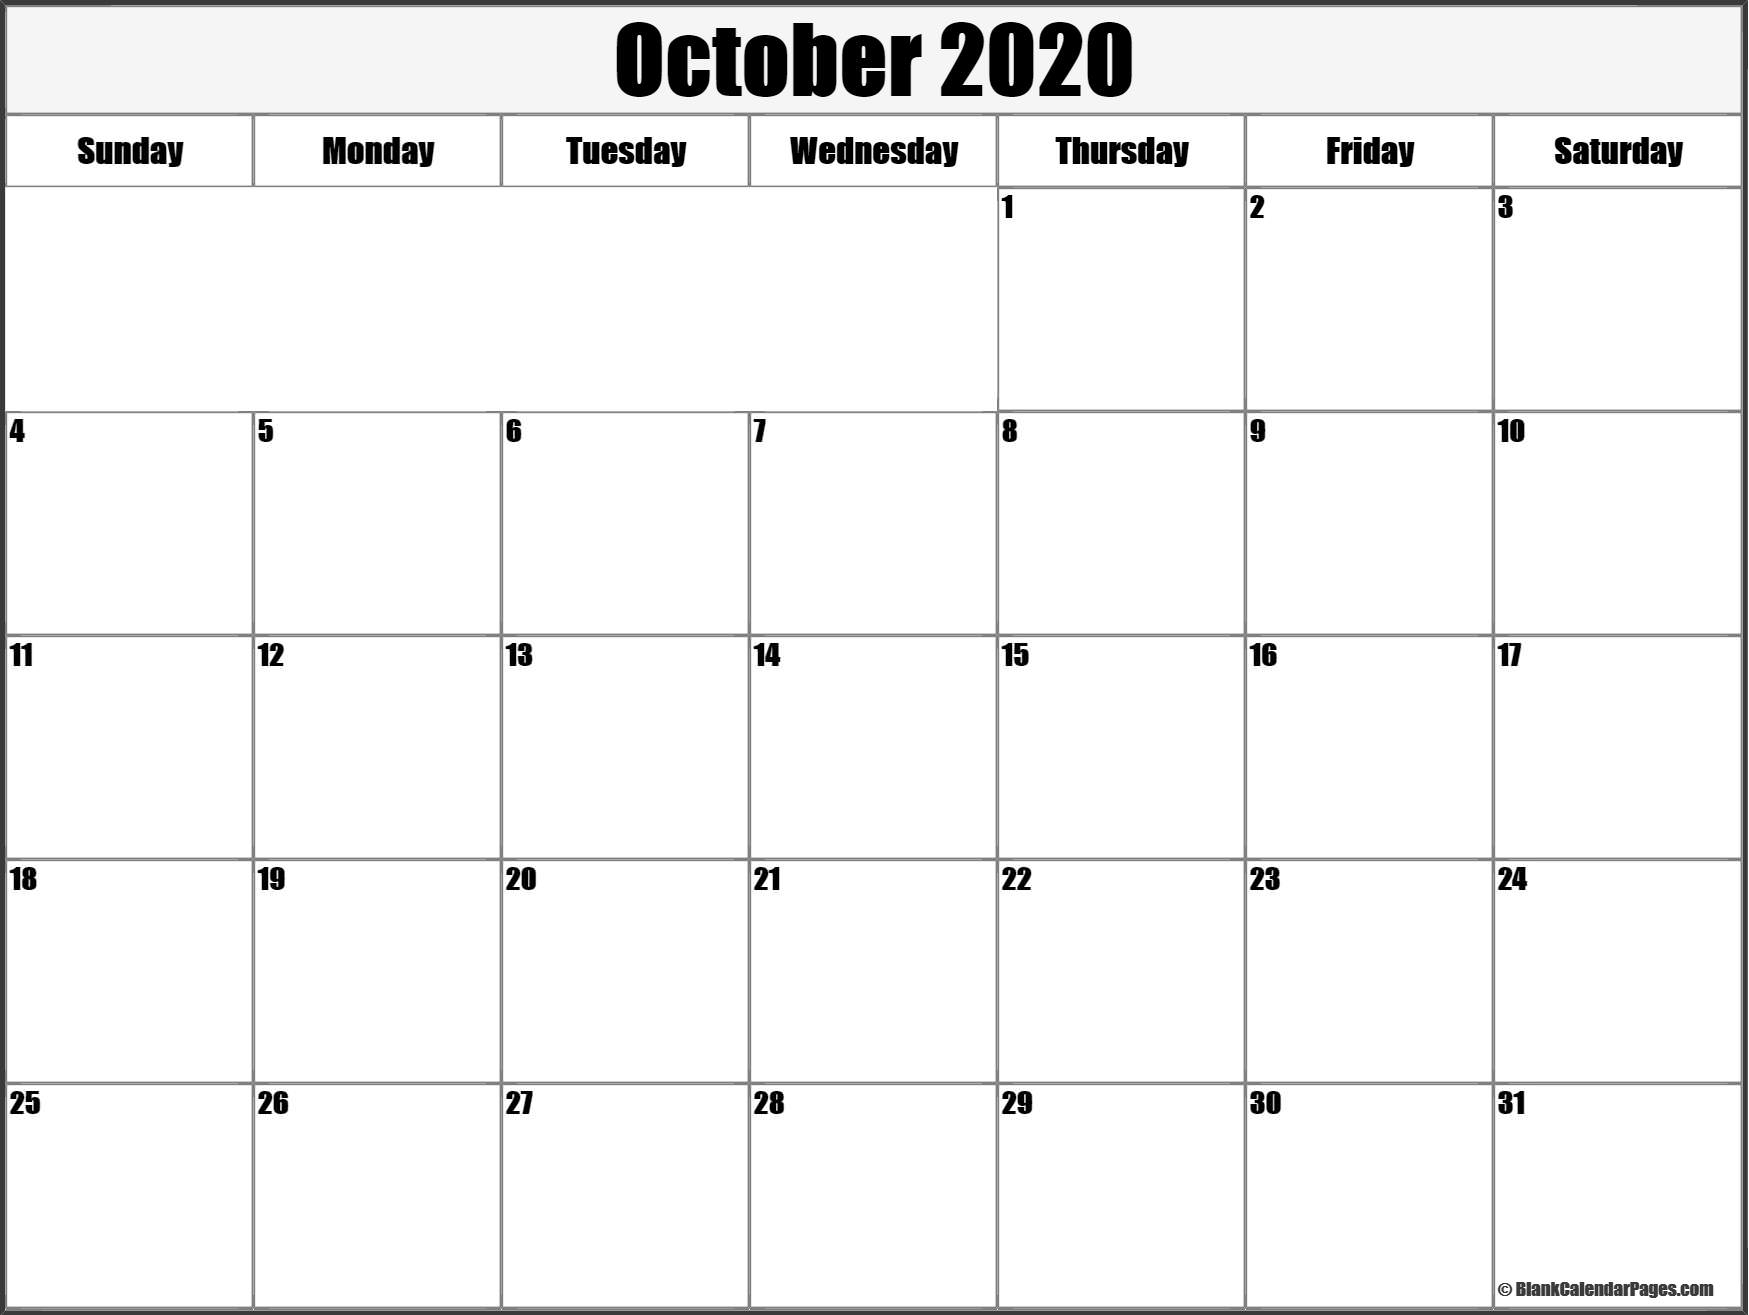 October 2020 Blank Calendar Templates.